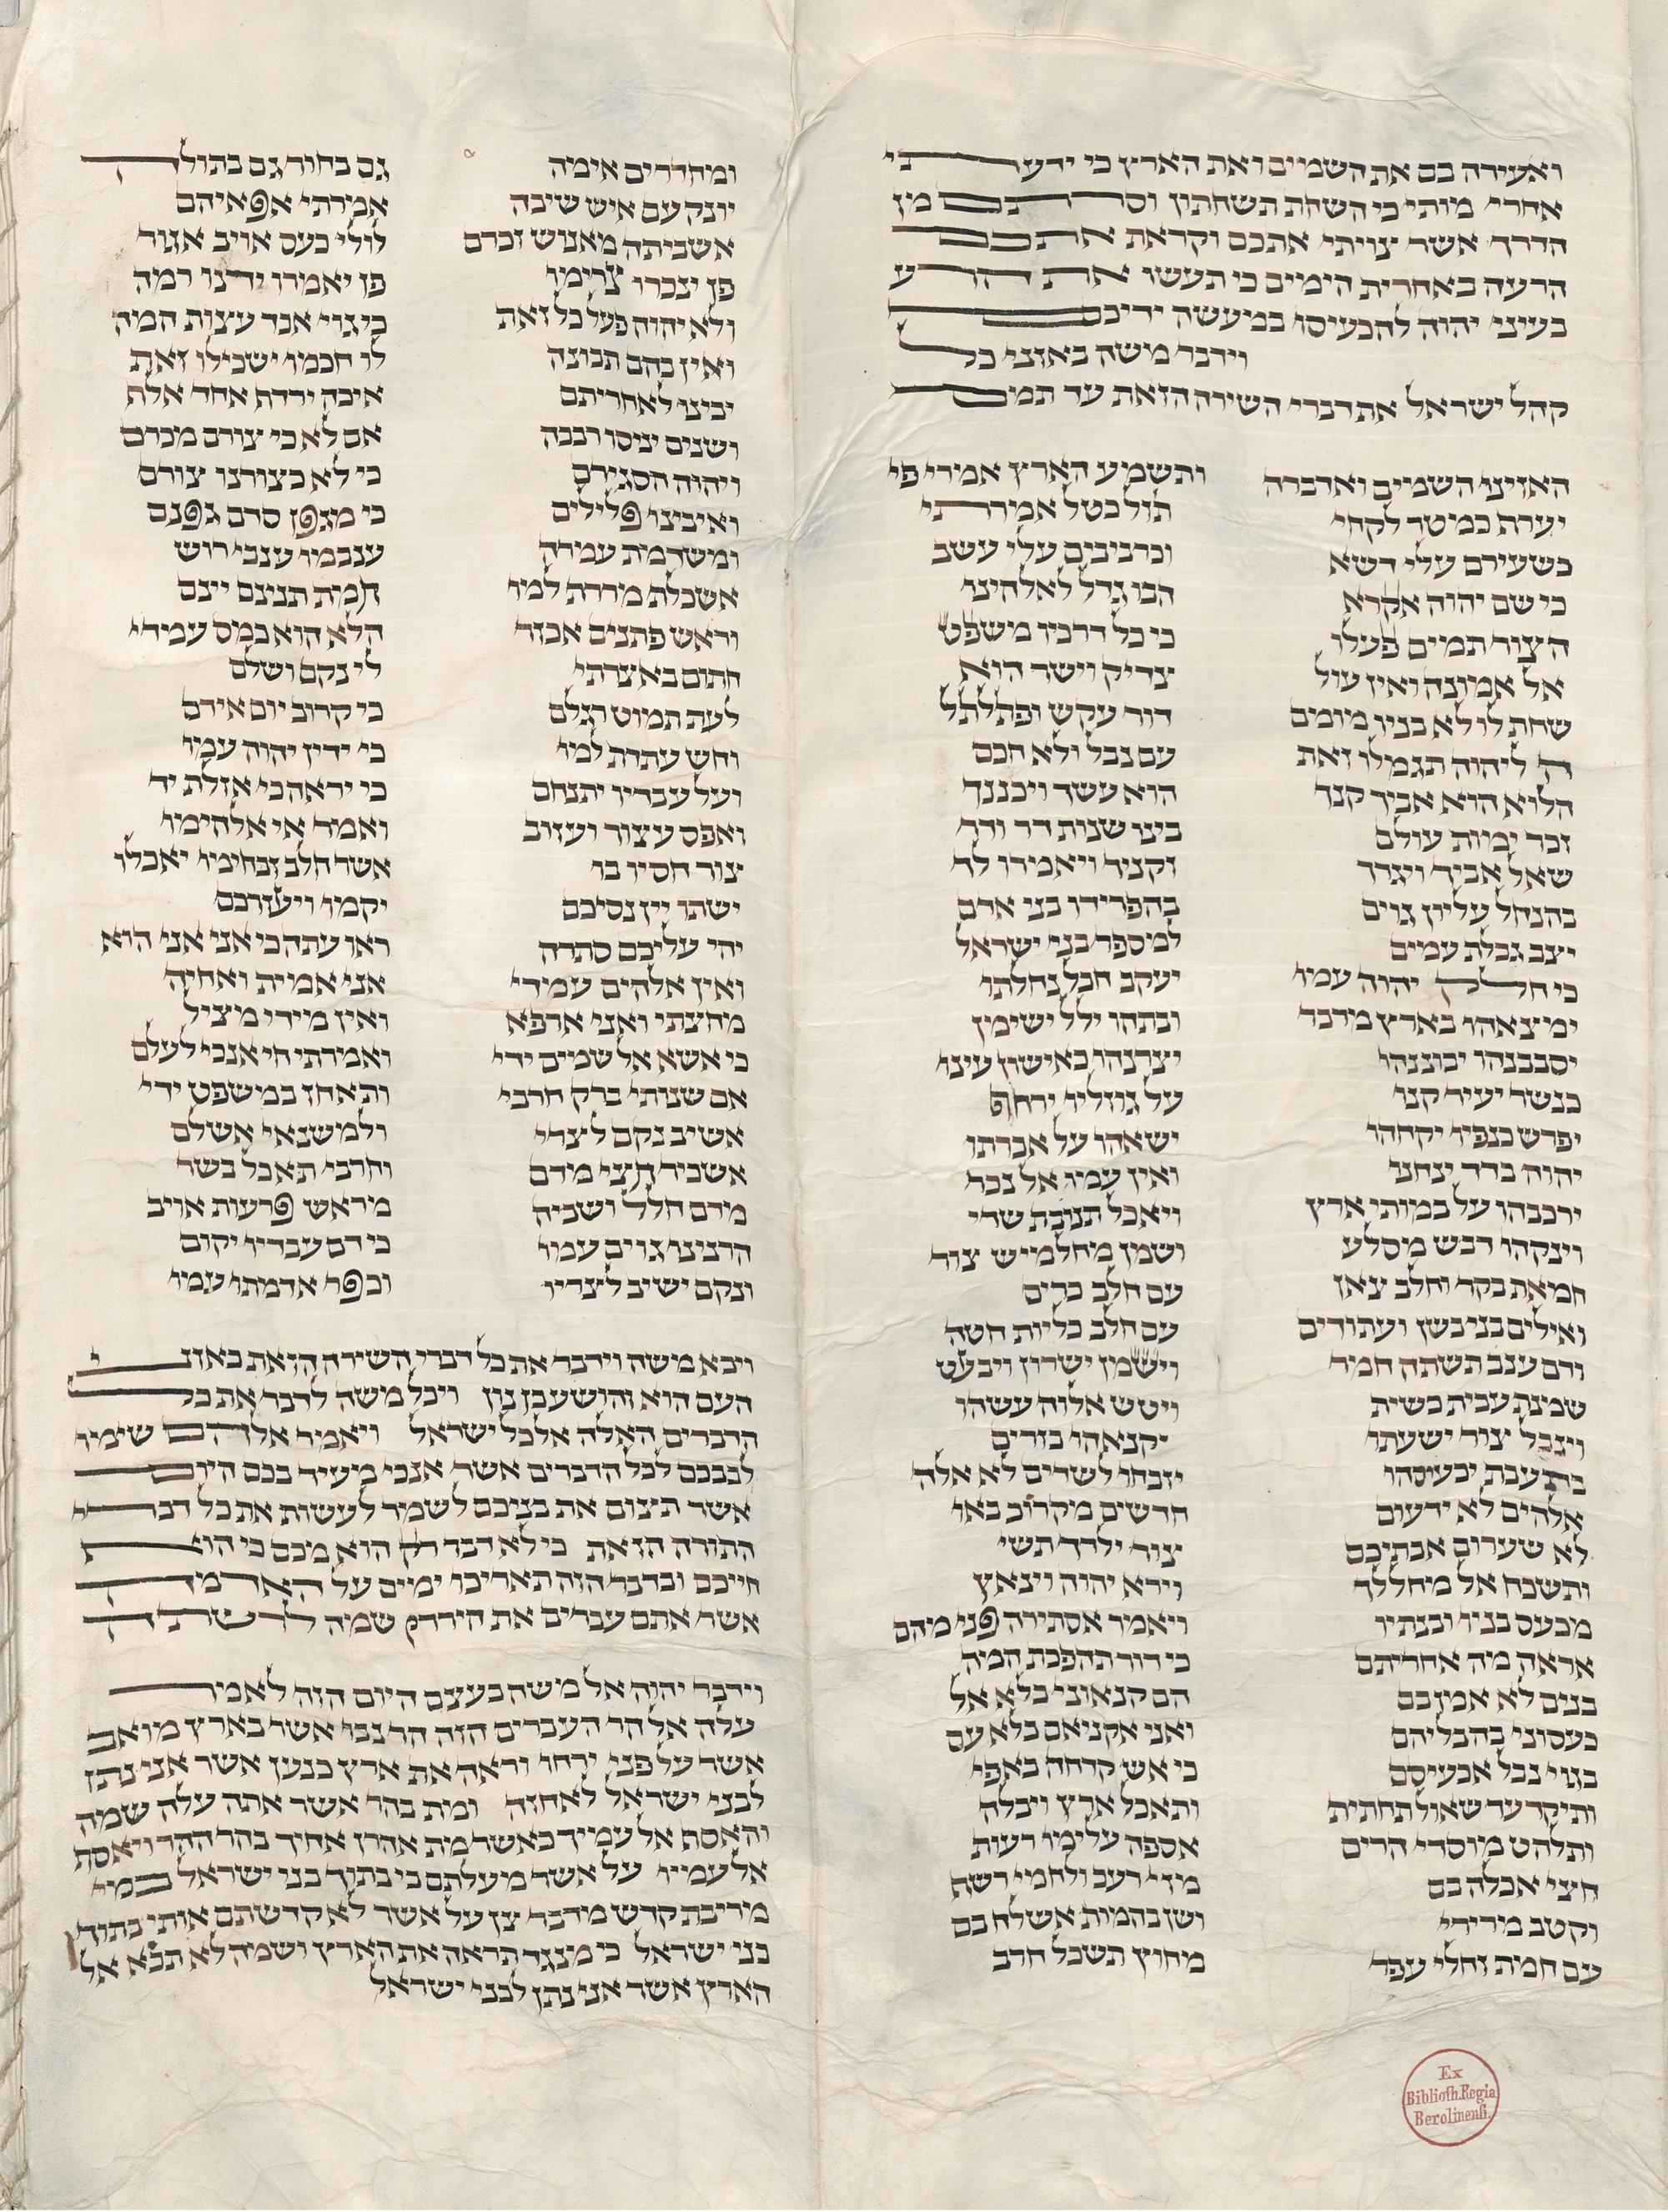 Ms. or. fol. 1218, Blatt 33, Moseslied